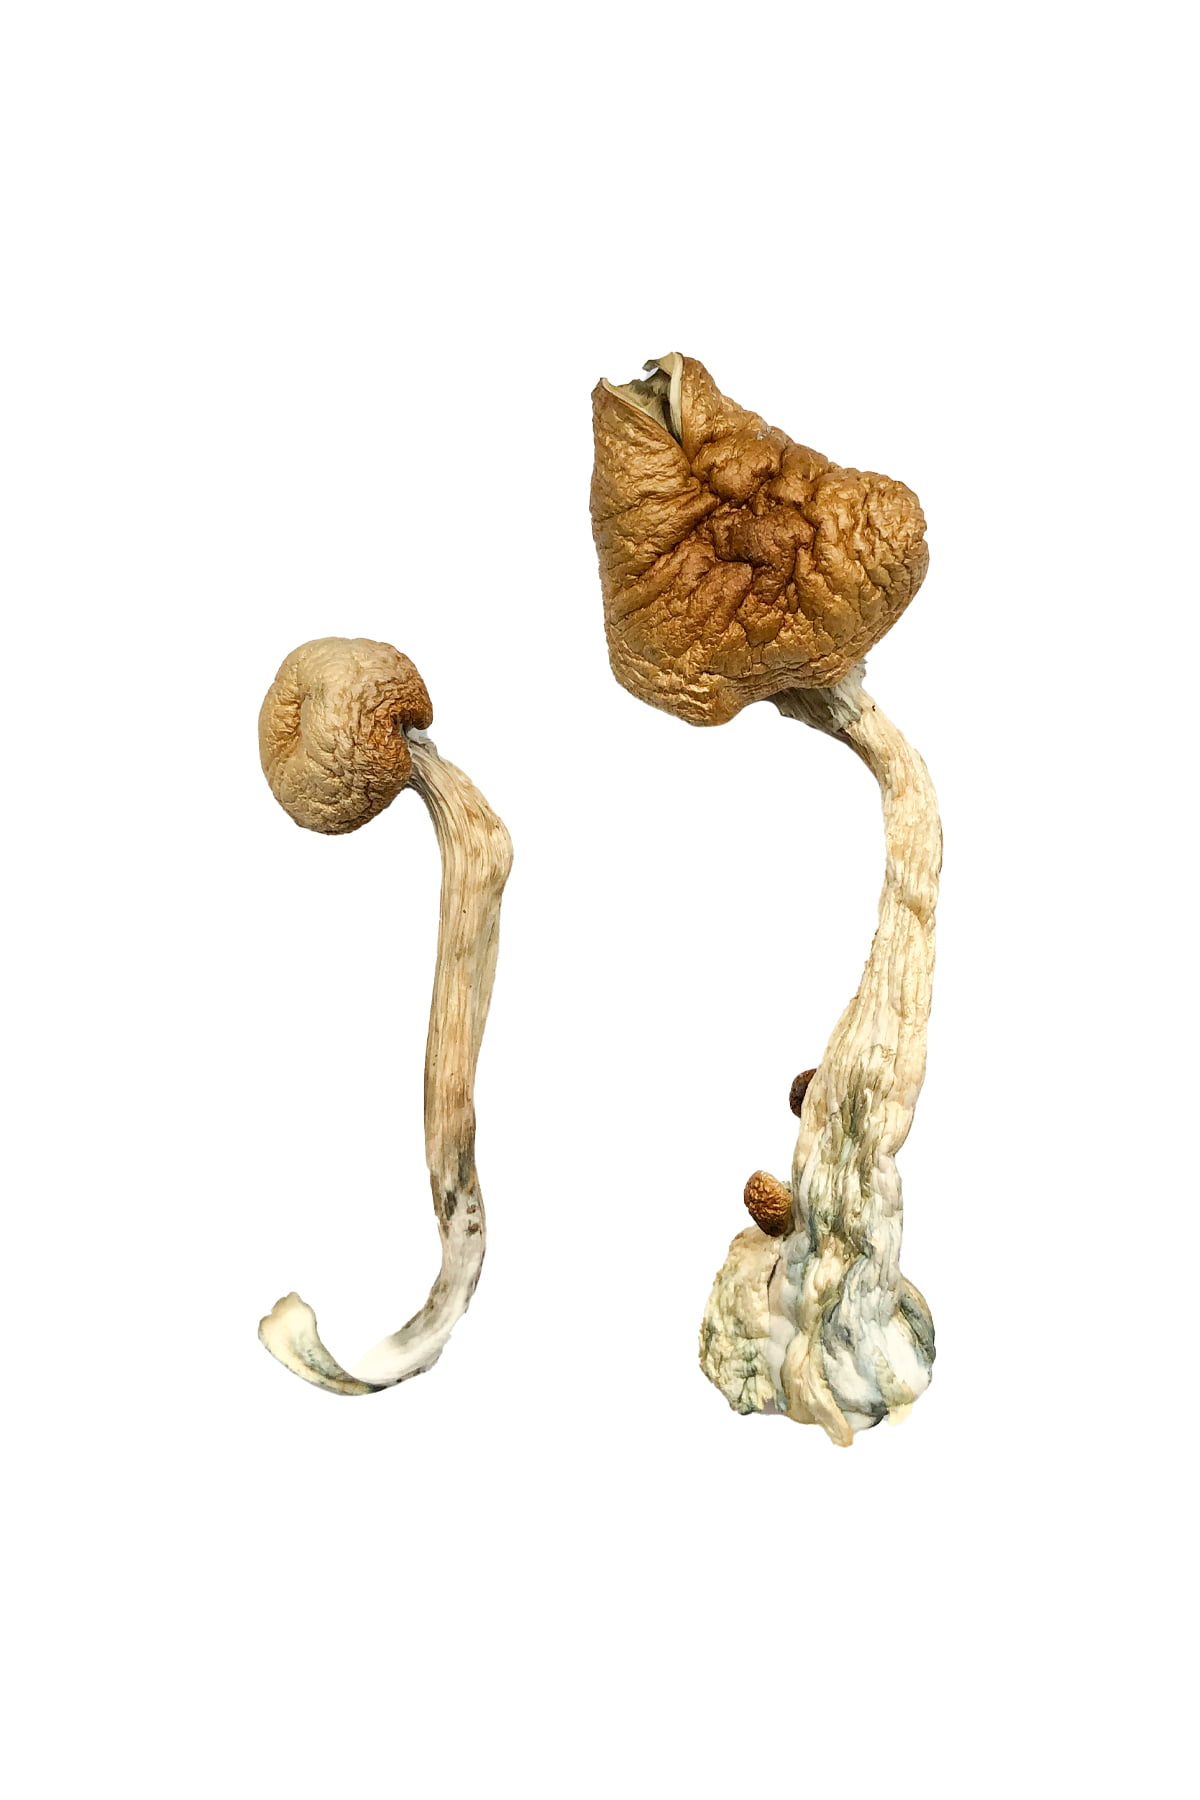 African Transkei Magic Mushrooms